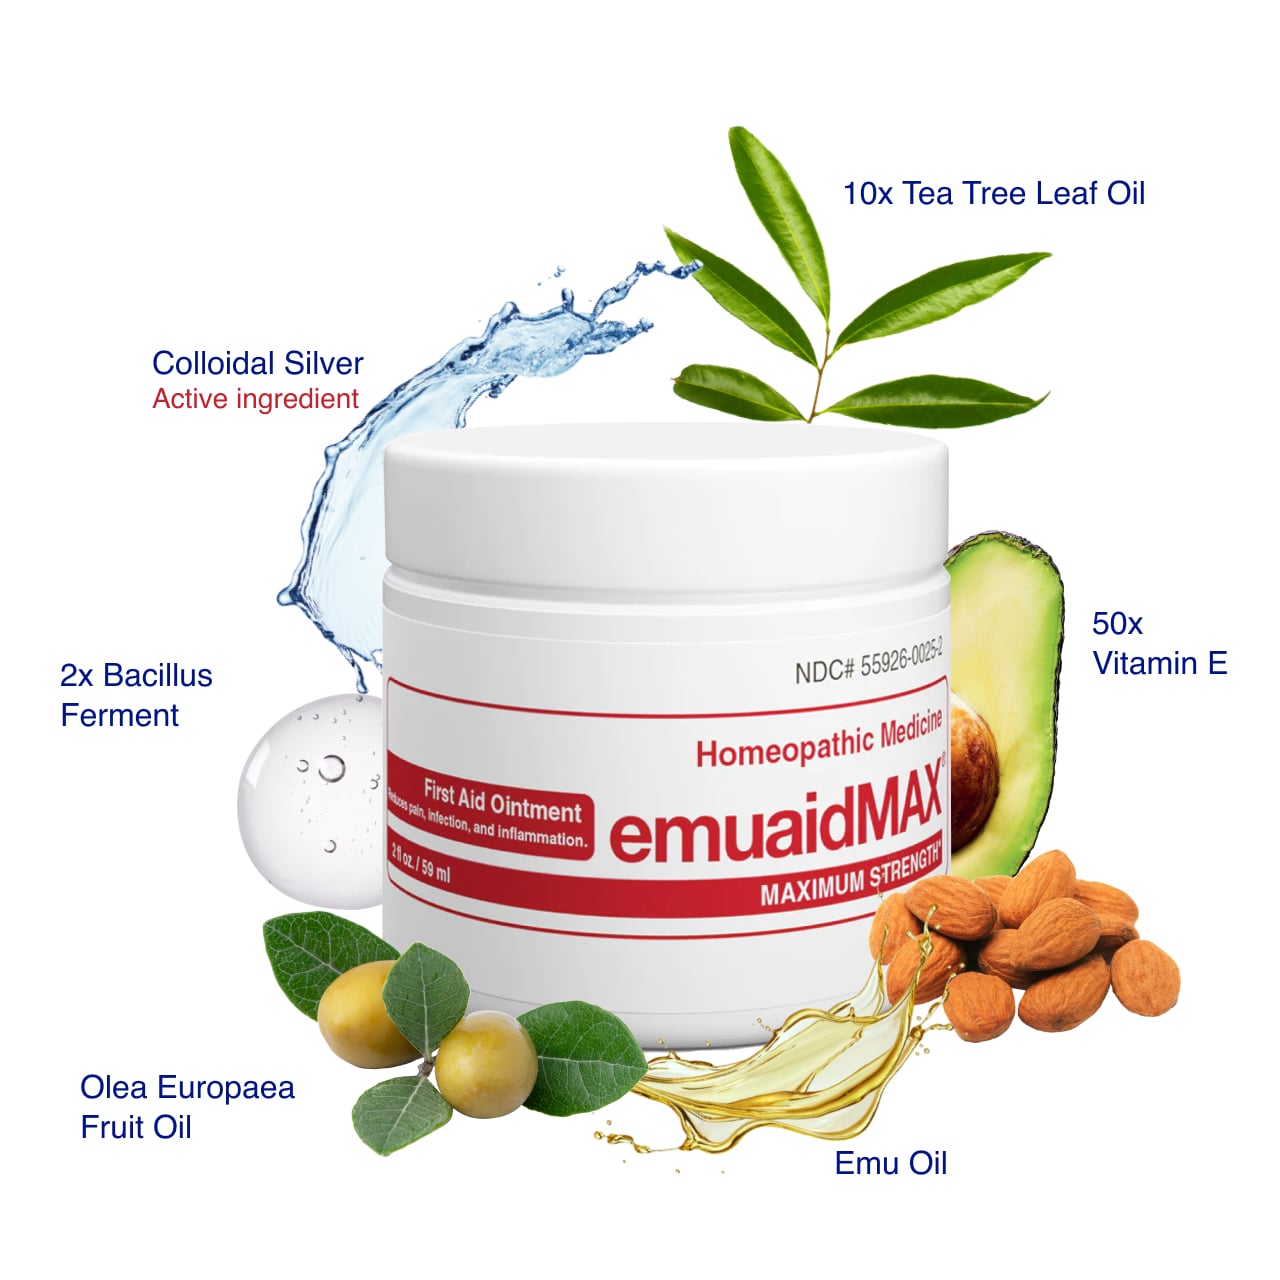 Emuaid Max Ointment 14mL - Nutrition Plus